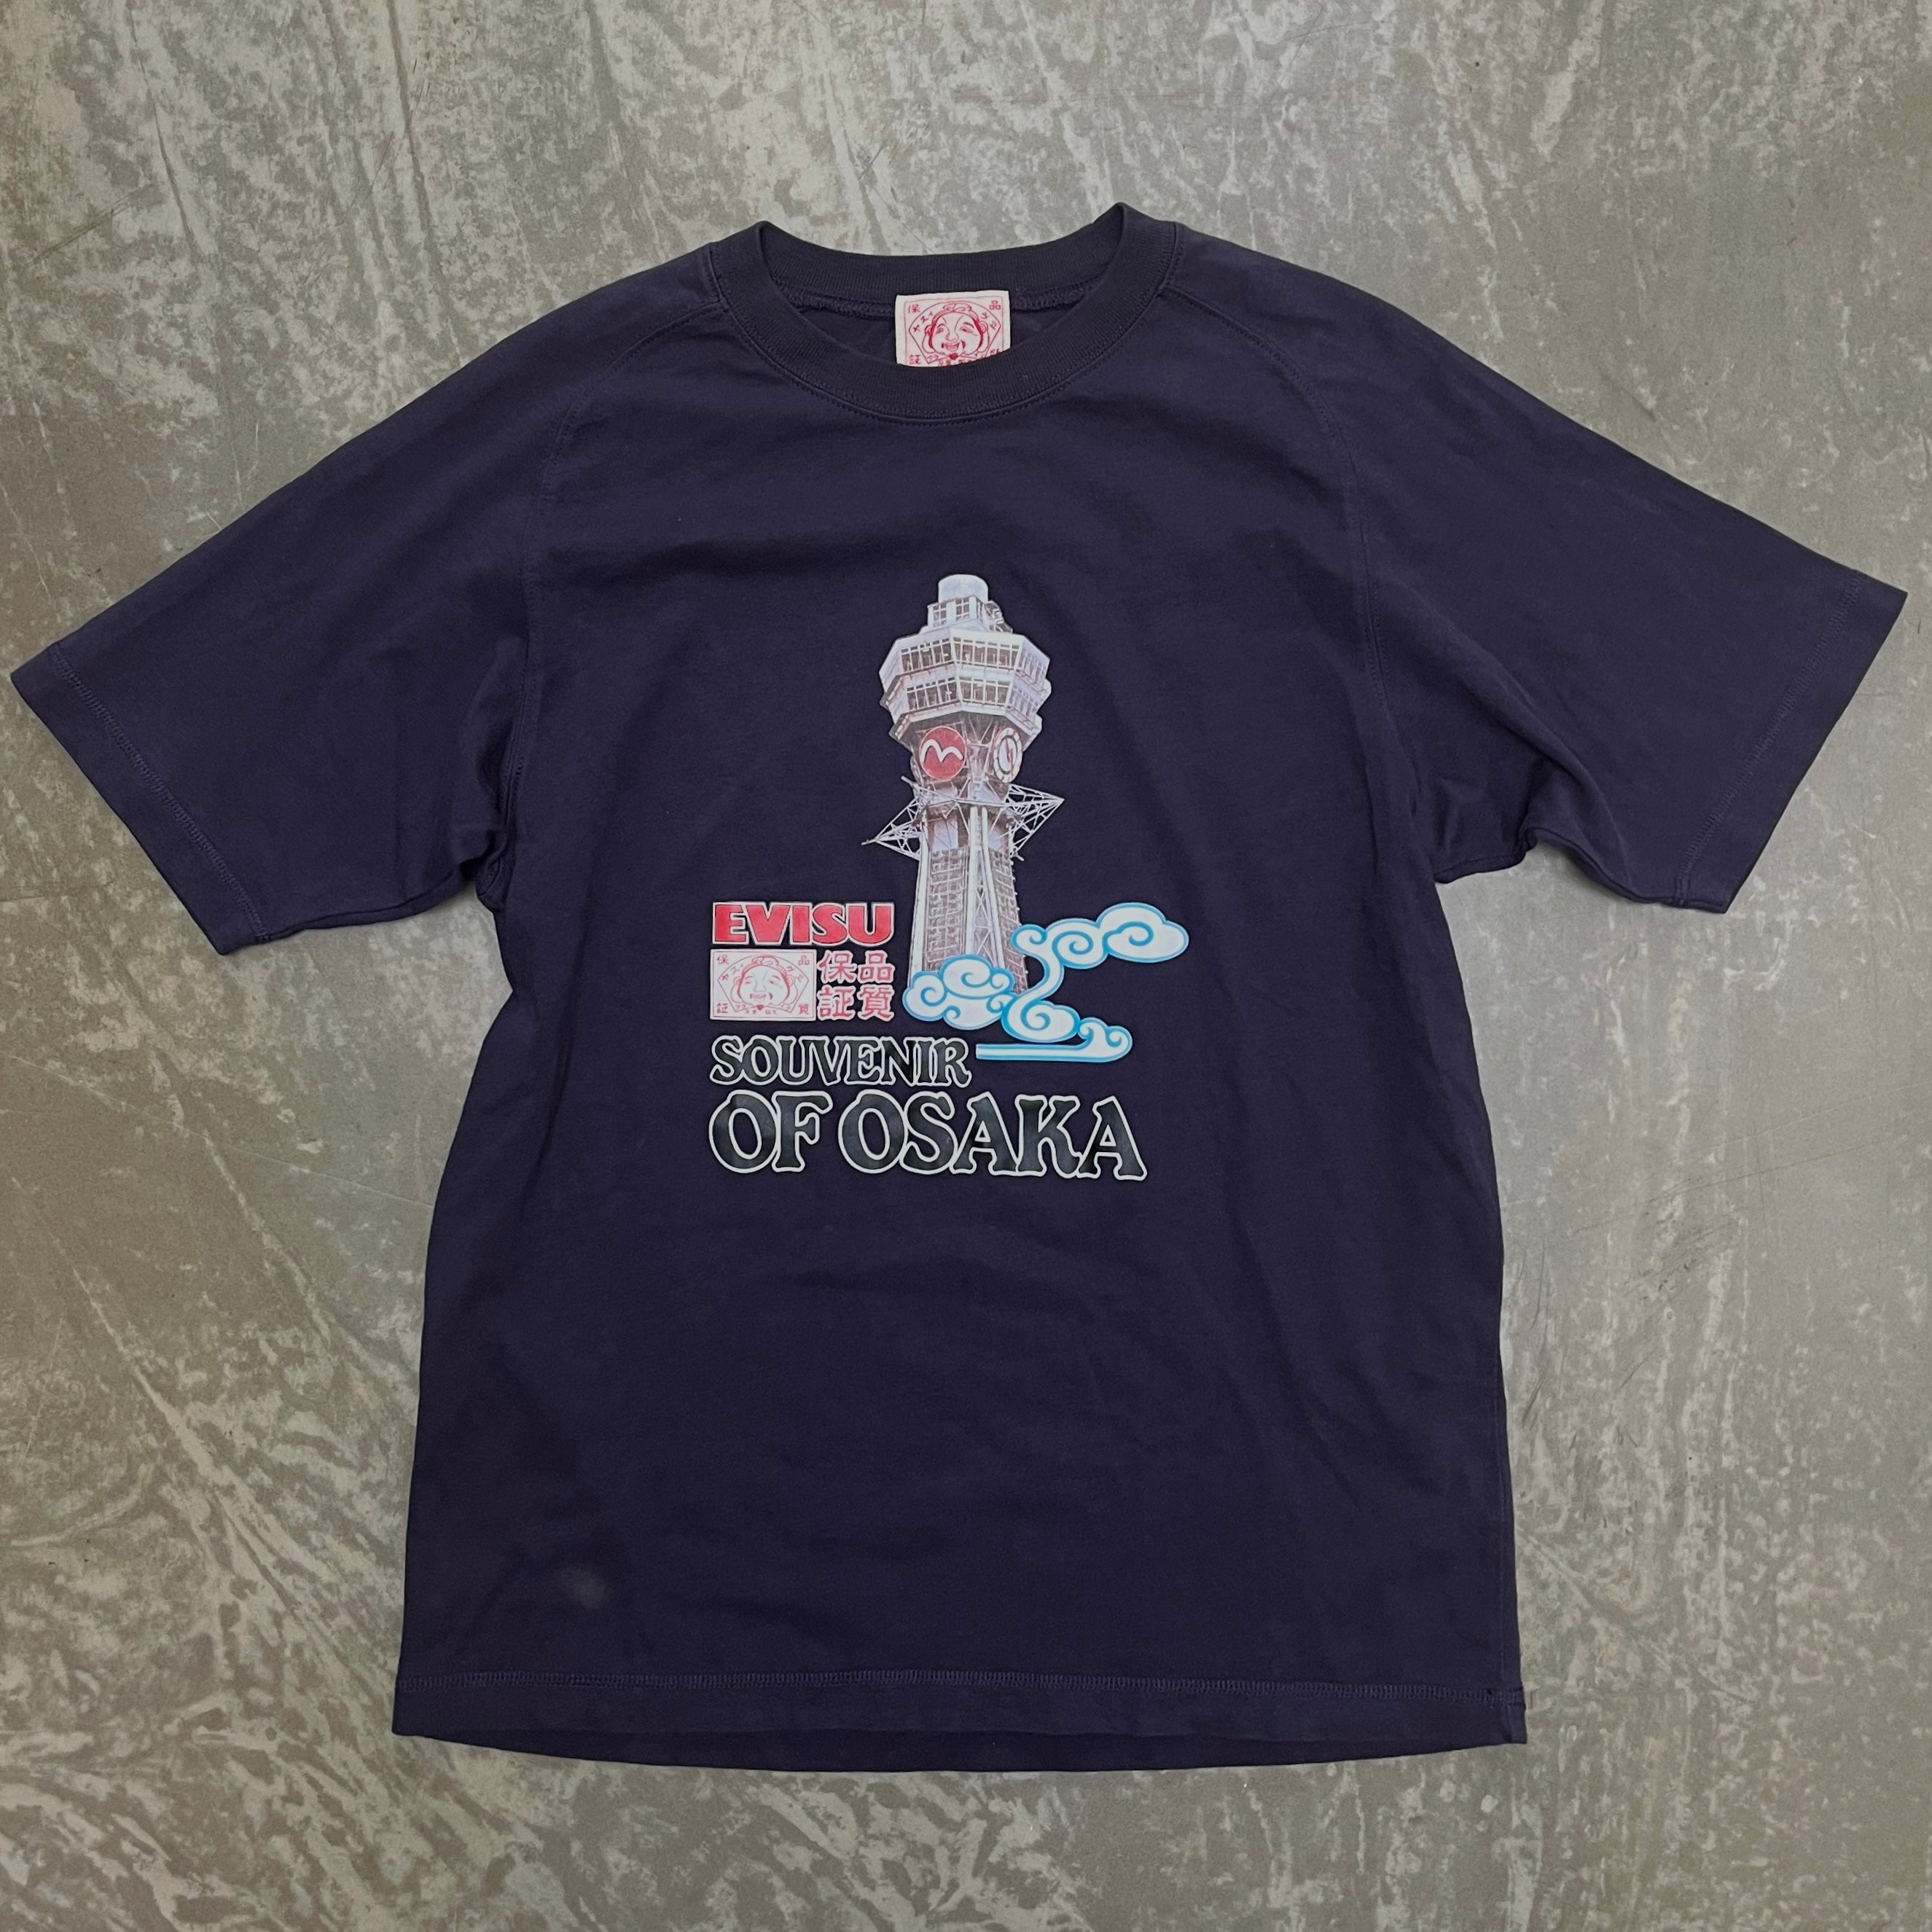 Evisu T-shirt (Size S)